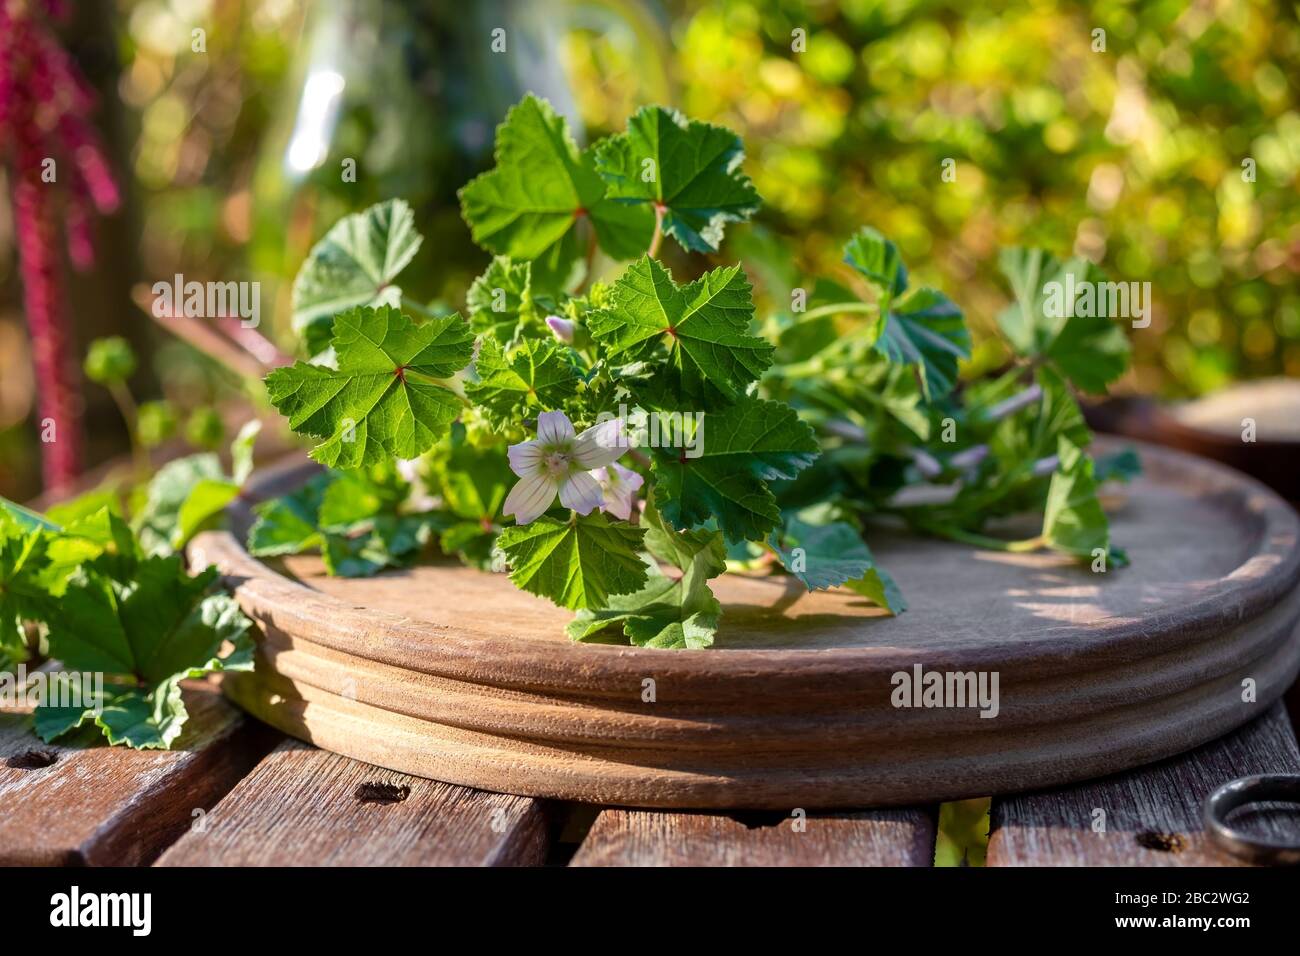 Fresh common mallow or Malva neglecta plant on a cutting board, outdoors Stock Photo